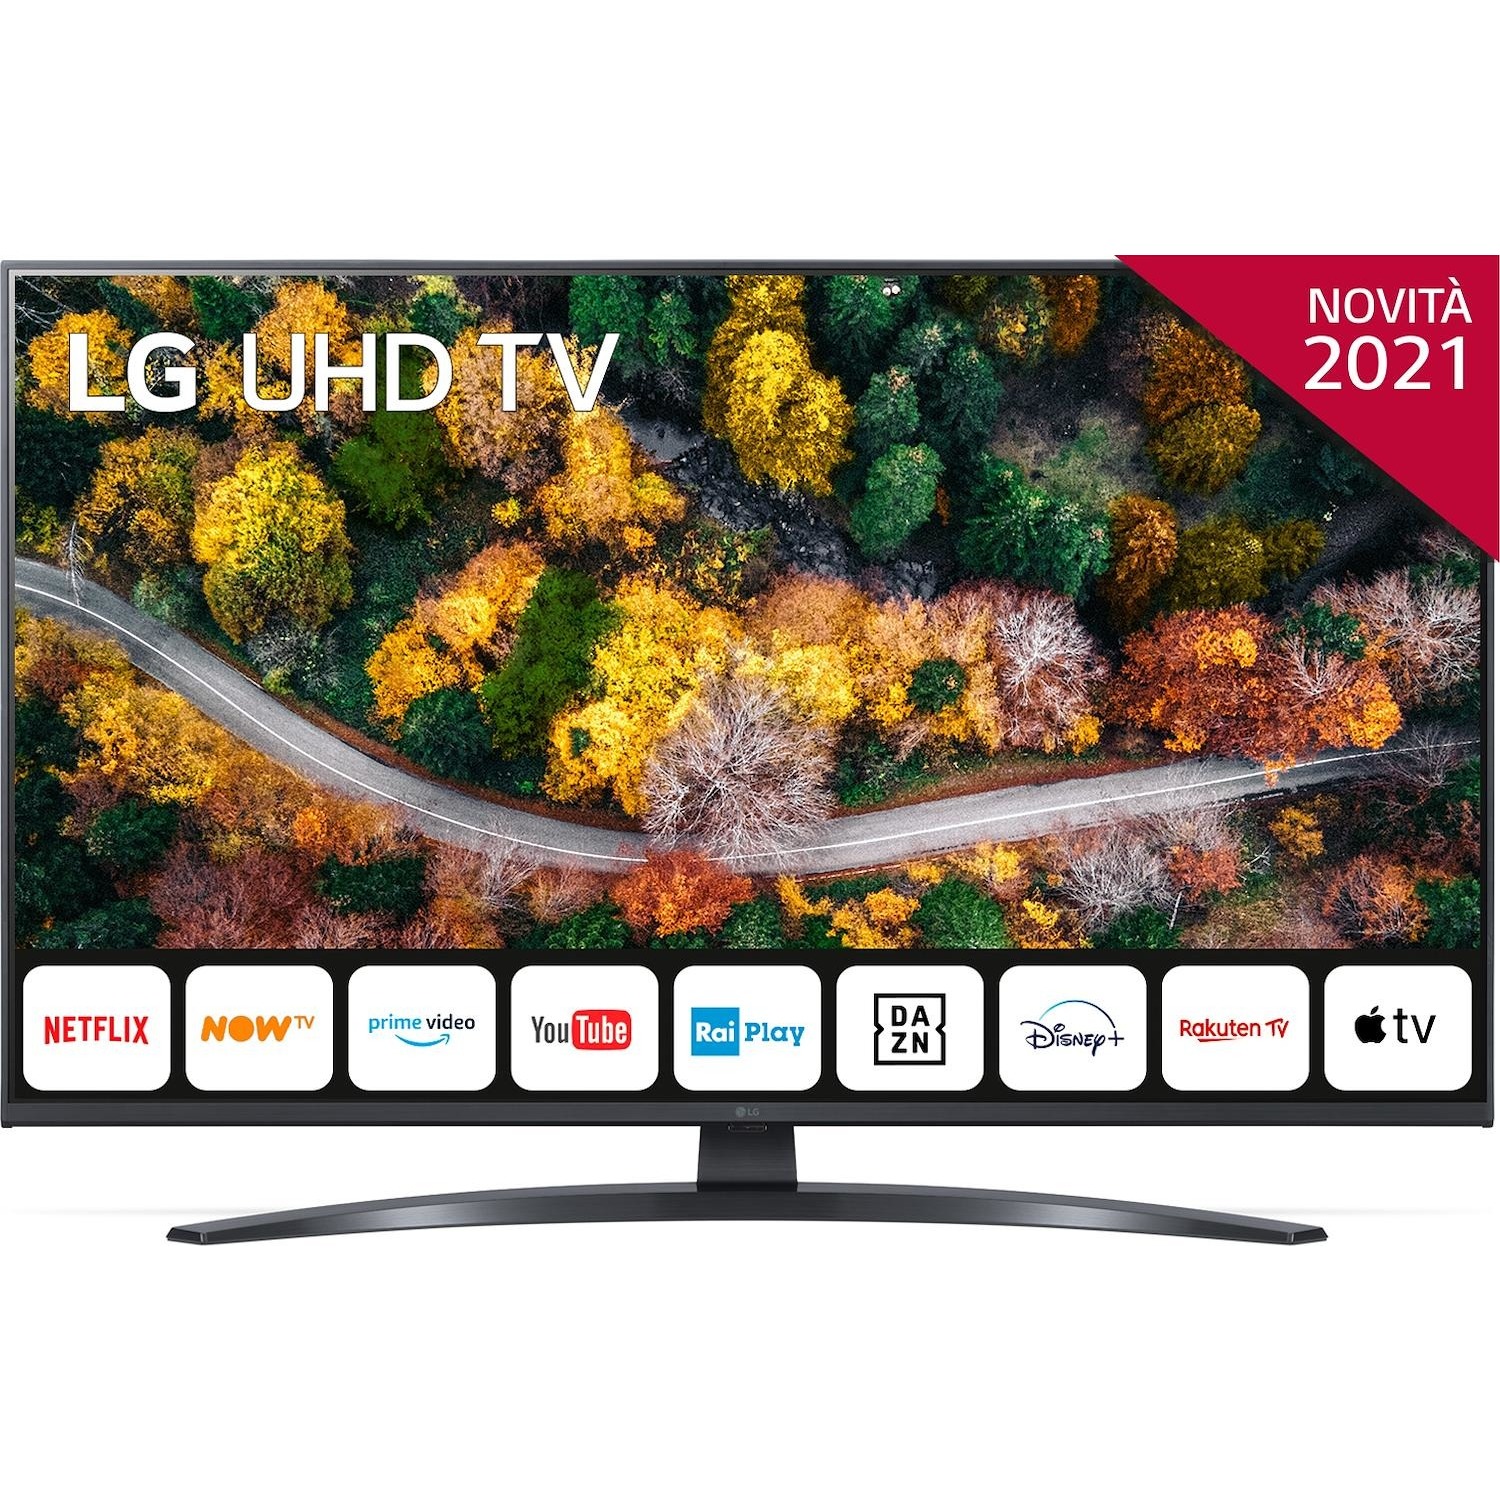 Immagine per TV LED Smart 4K UHD LG 43UP78006 da DIMOStore